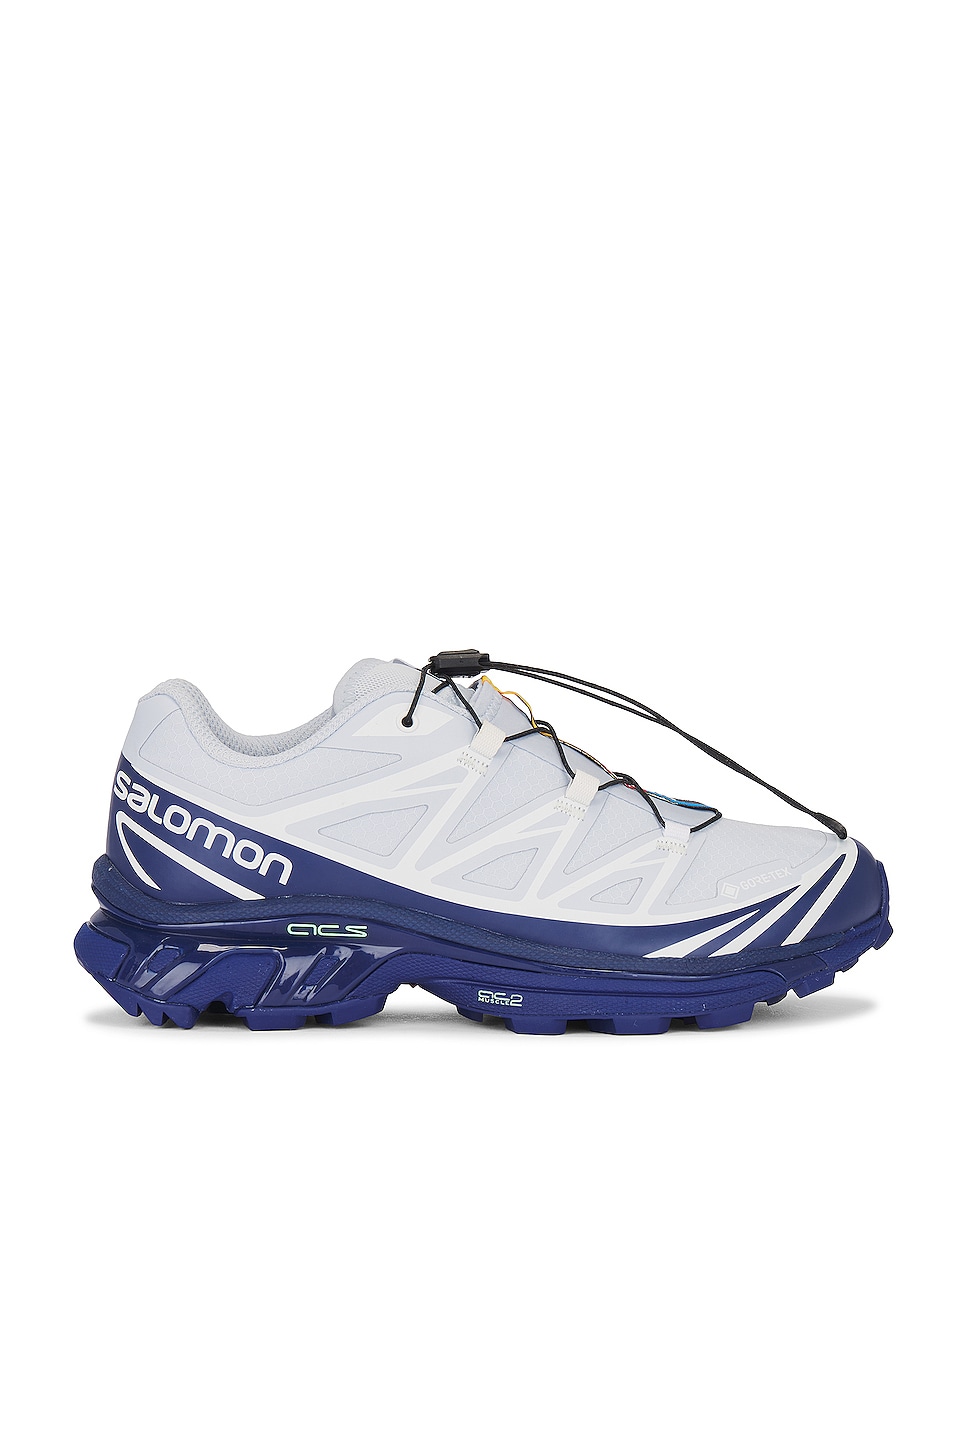 Image 1 of Salomon XT-6 GTX Sneaker in Blue Print, Heather, & White